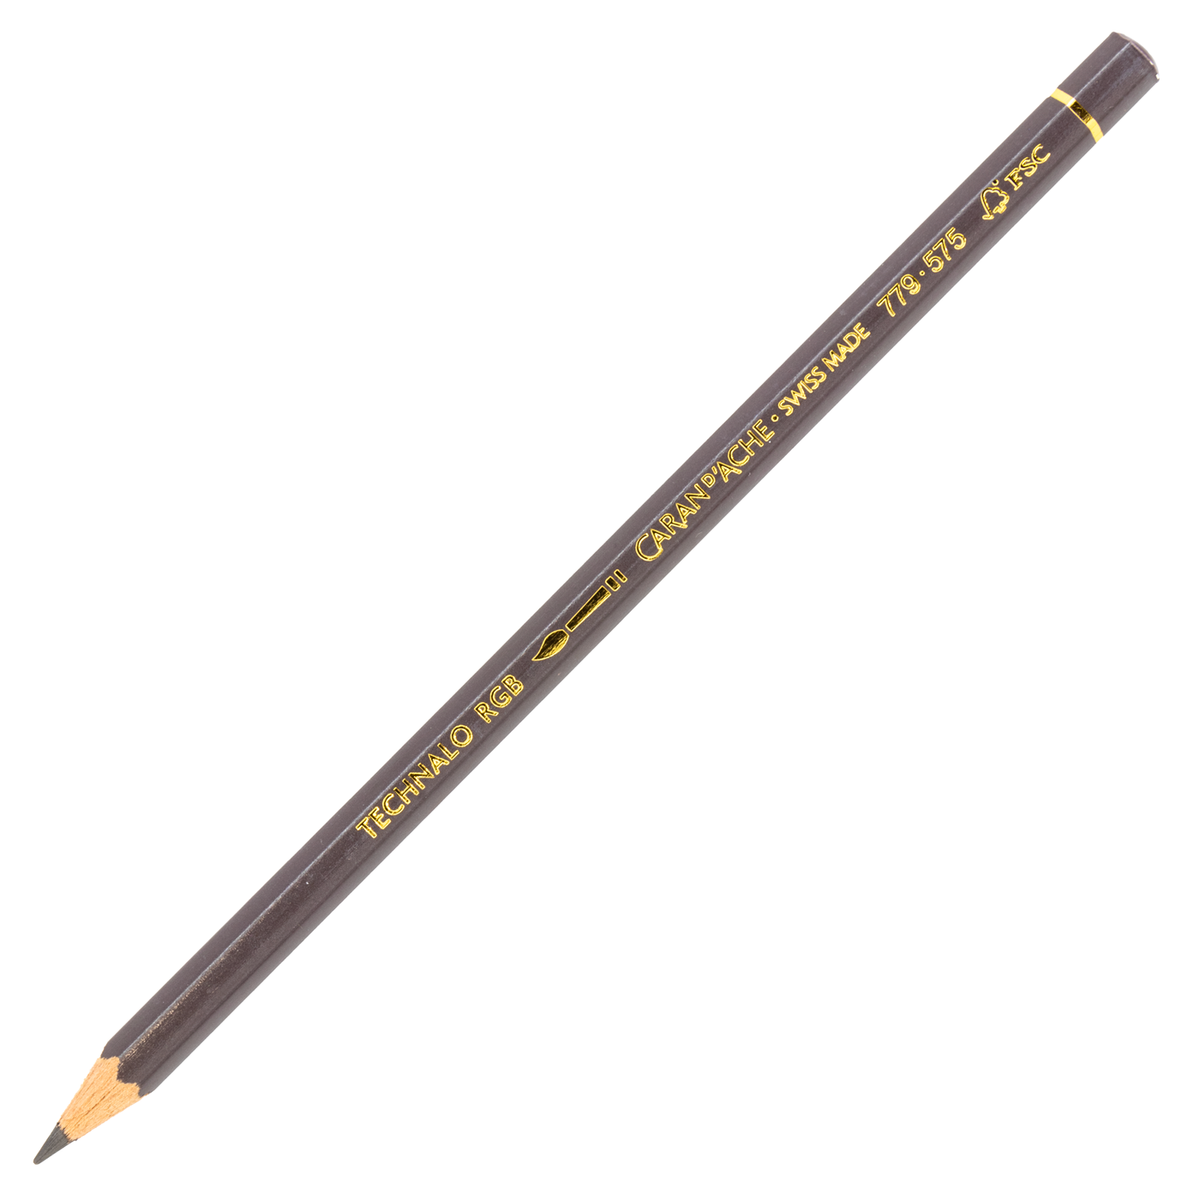 Caran d'Ache Metallic Pencils